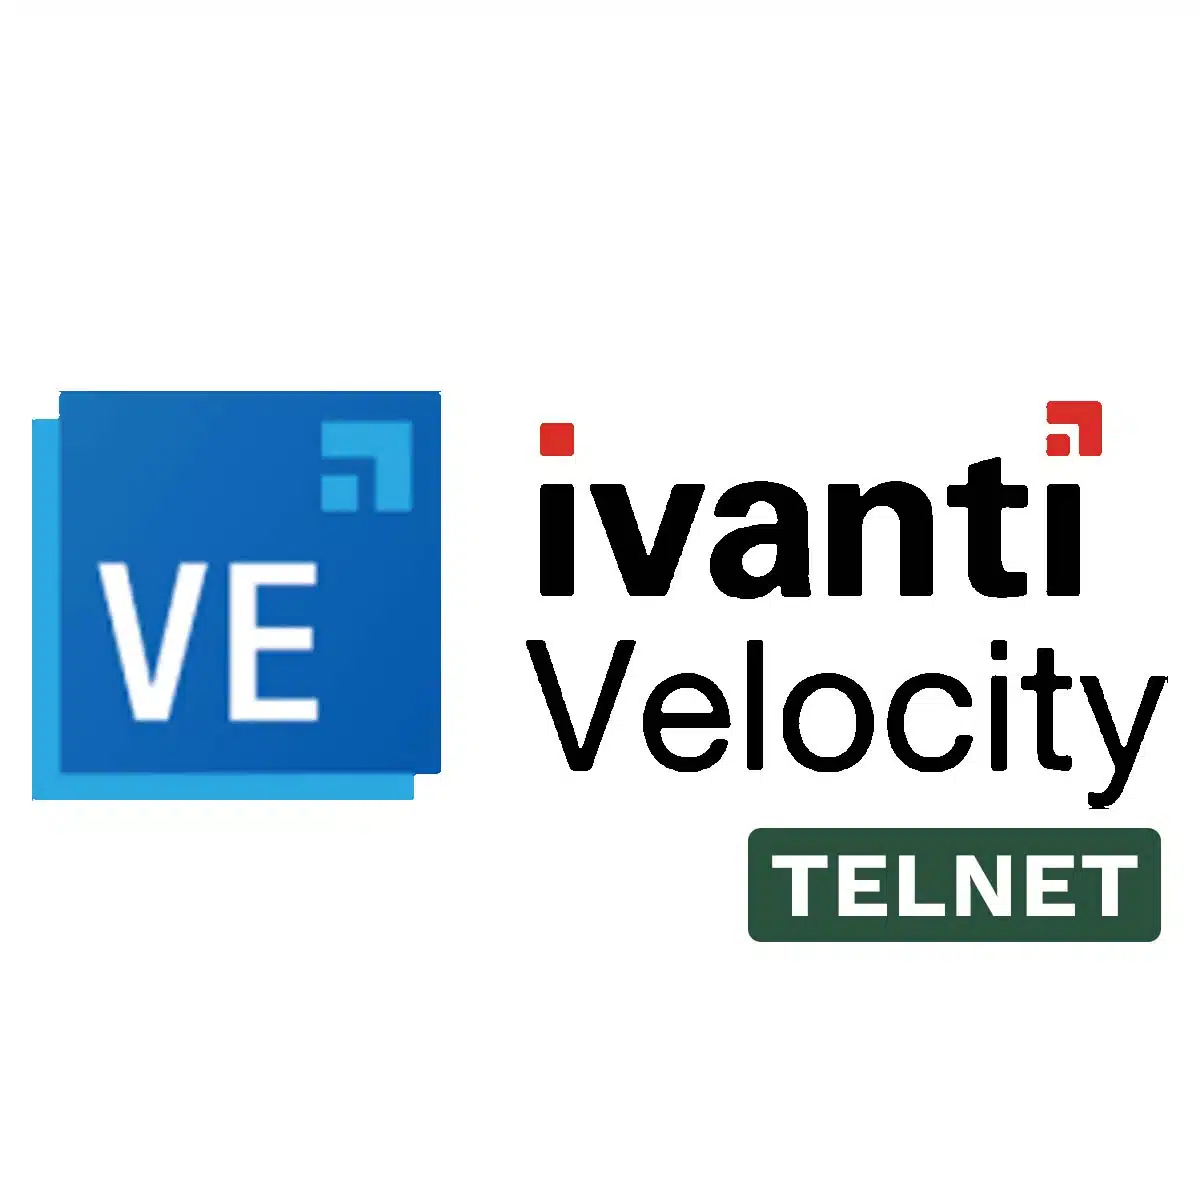 Velocity Telnet License and 1 Year Maintenance 140-LM-VELOCTE